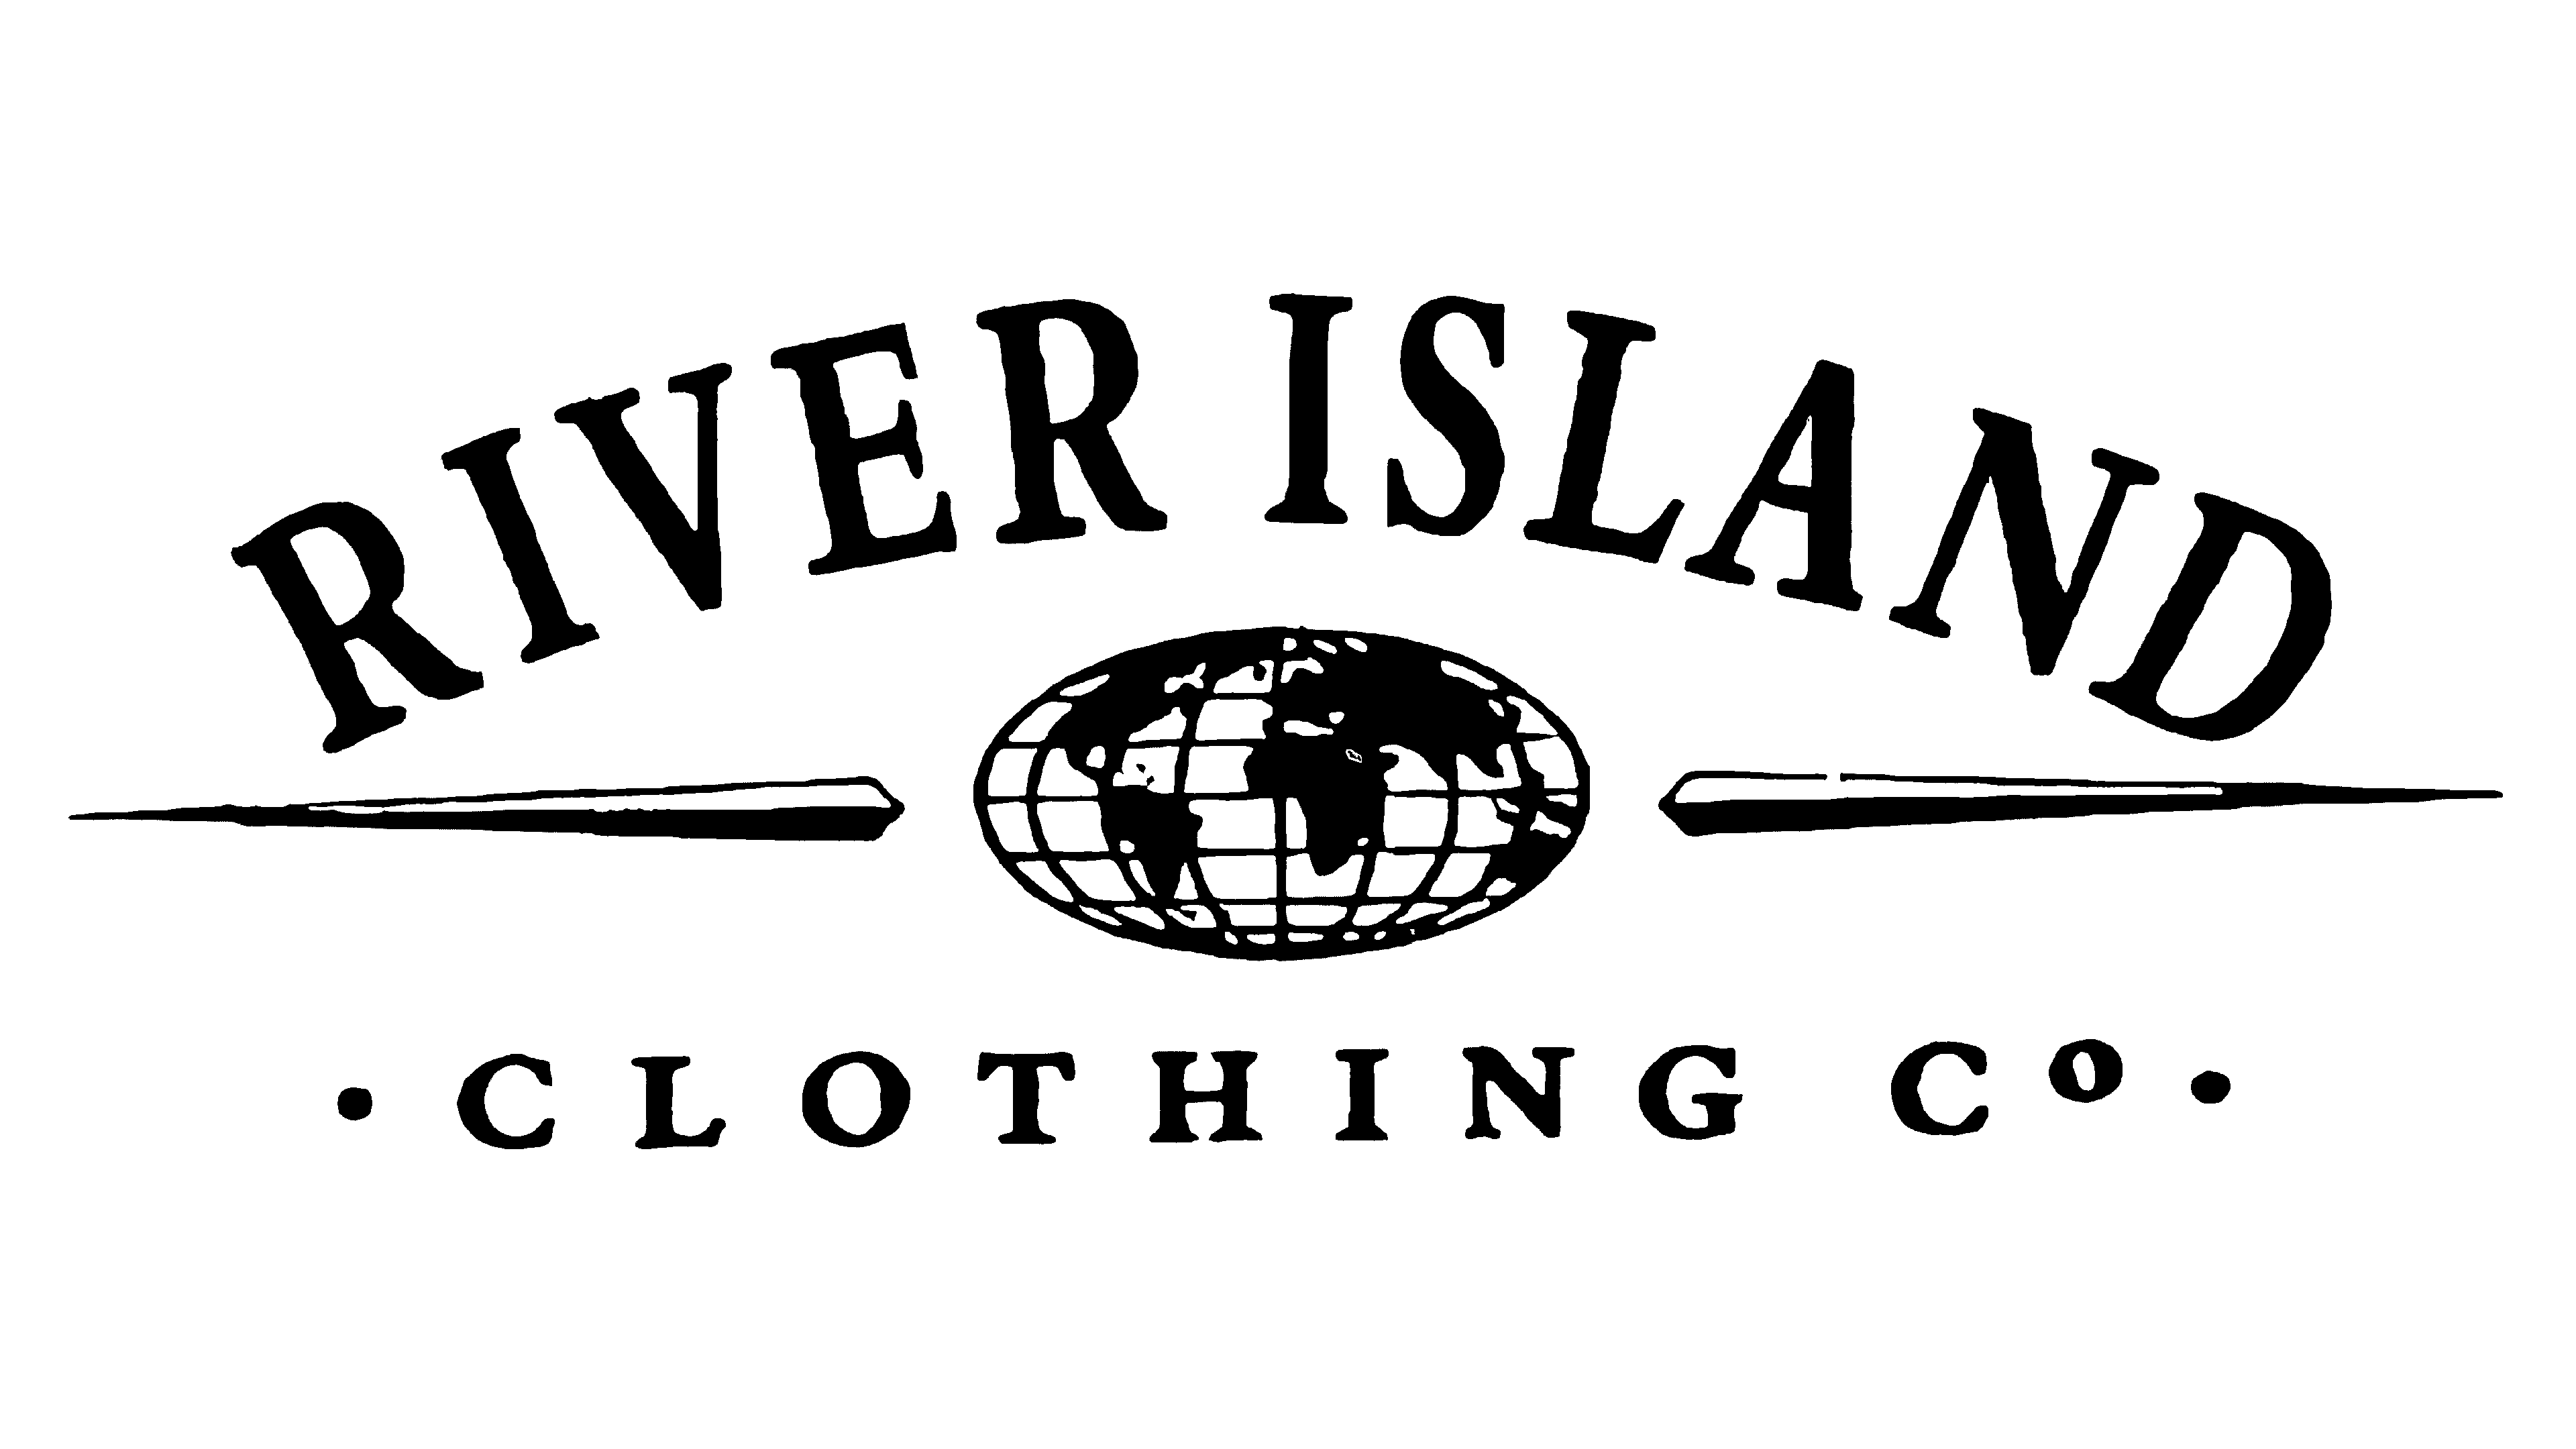 https://1000logos.net/wp-content/uploads/2018/07/River-Island-Logo-1991.png